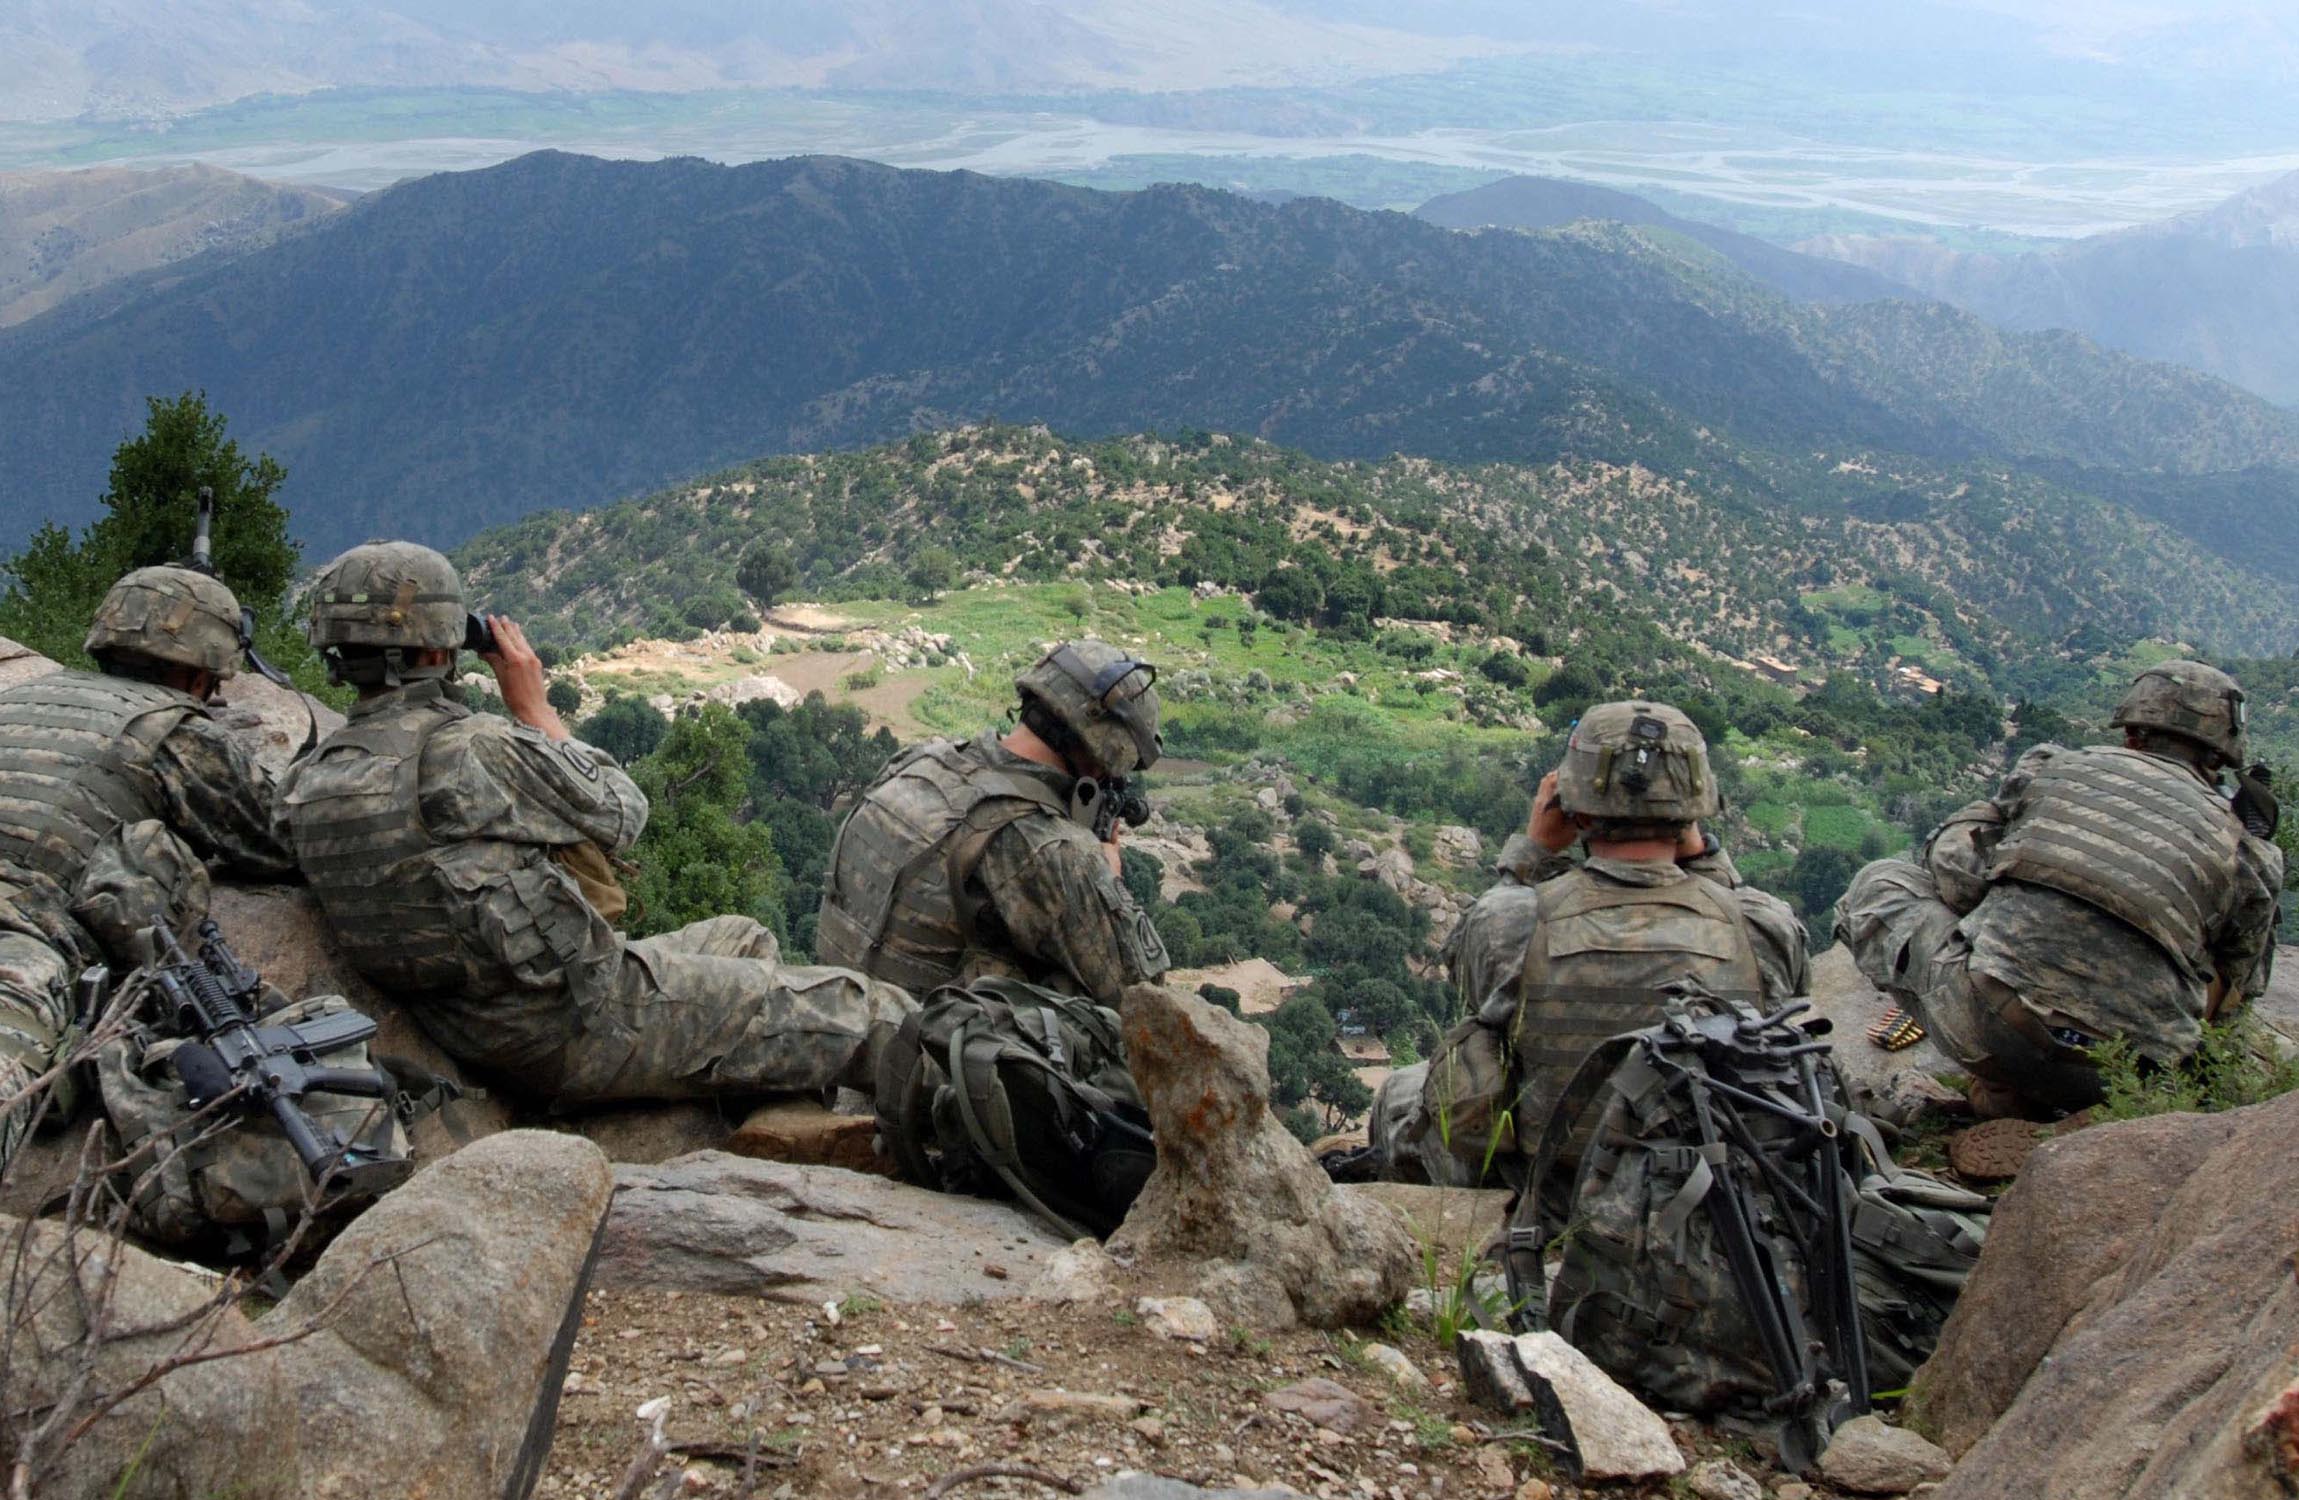 File:US Army Afghanistan 2006.jpg - Wikipedia, the free encyclopedia